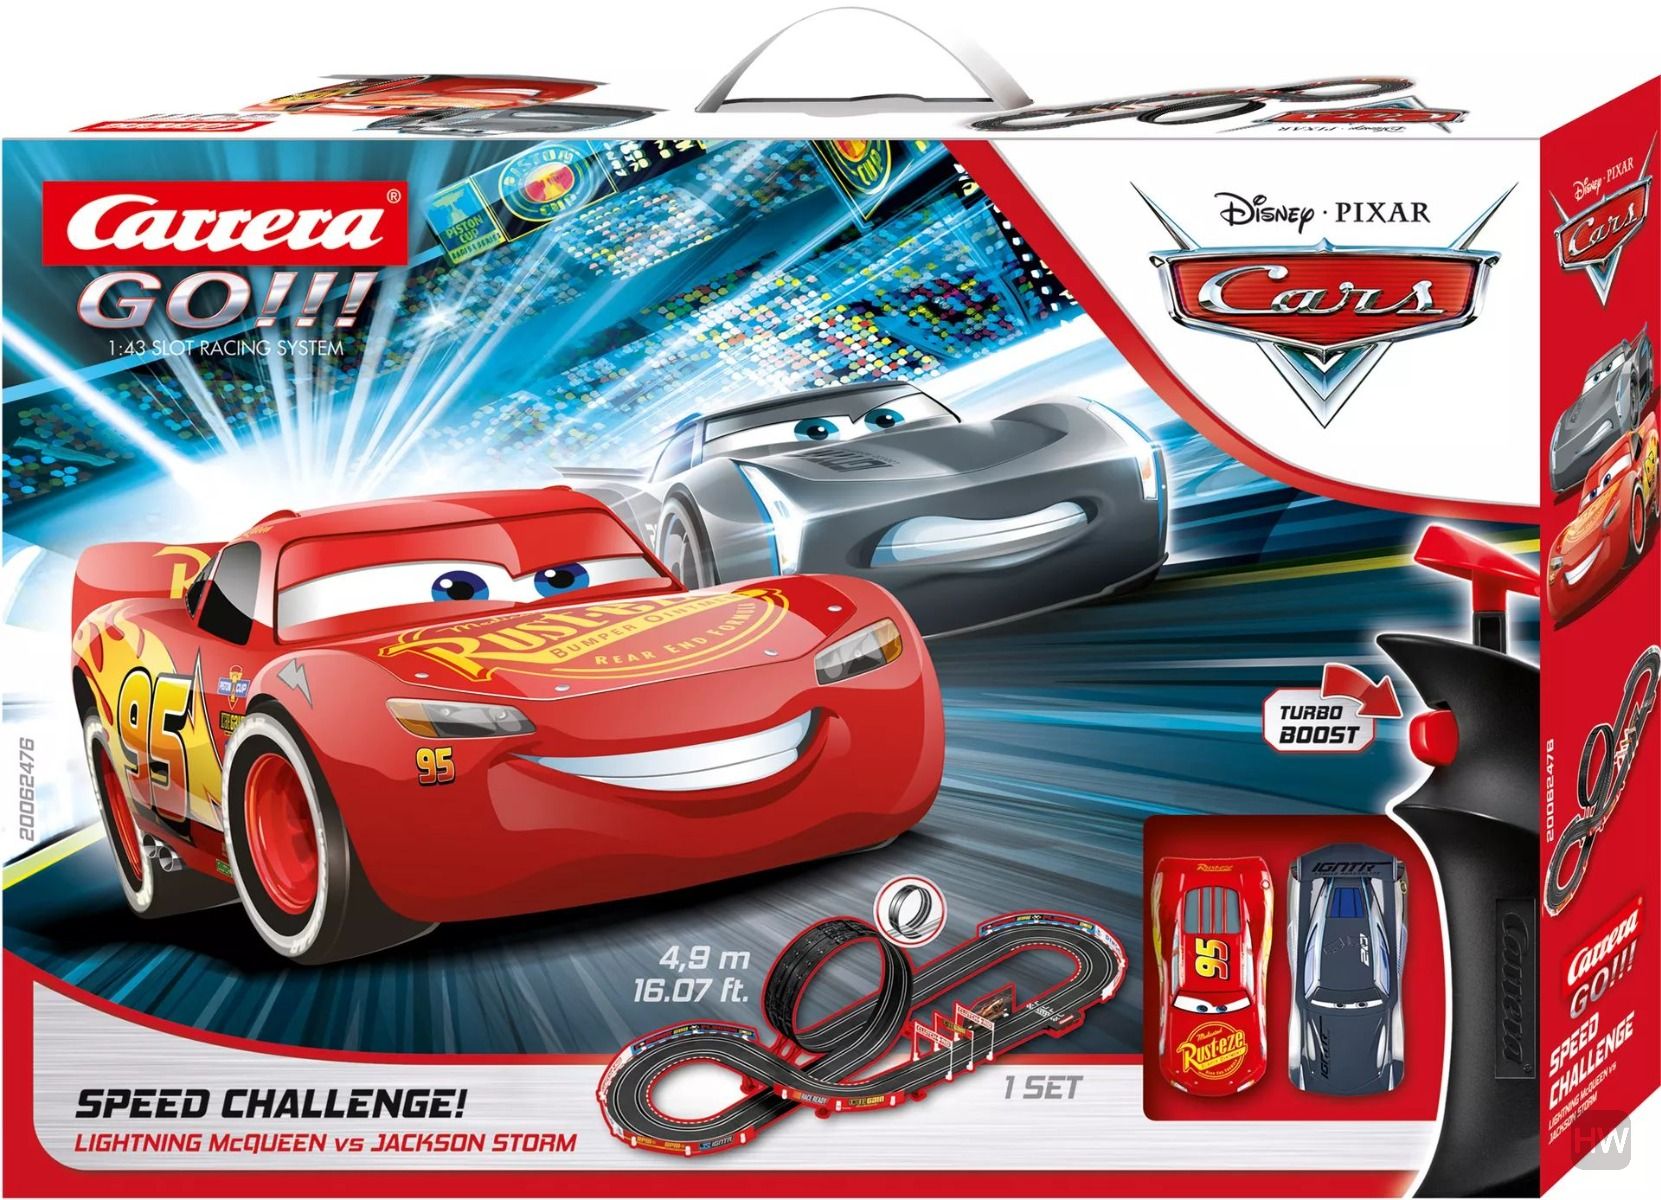 Carrera GO!!! Disney Pixar Cars 16 Foot Racing Track Game Toy Play Set